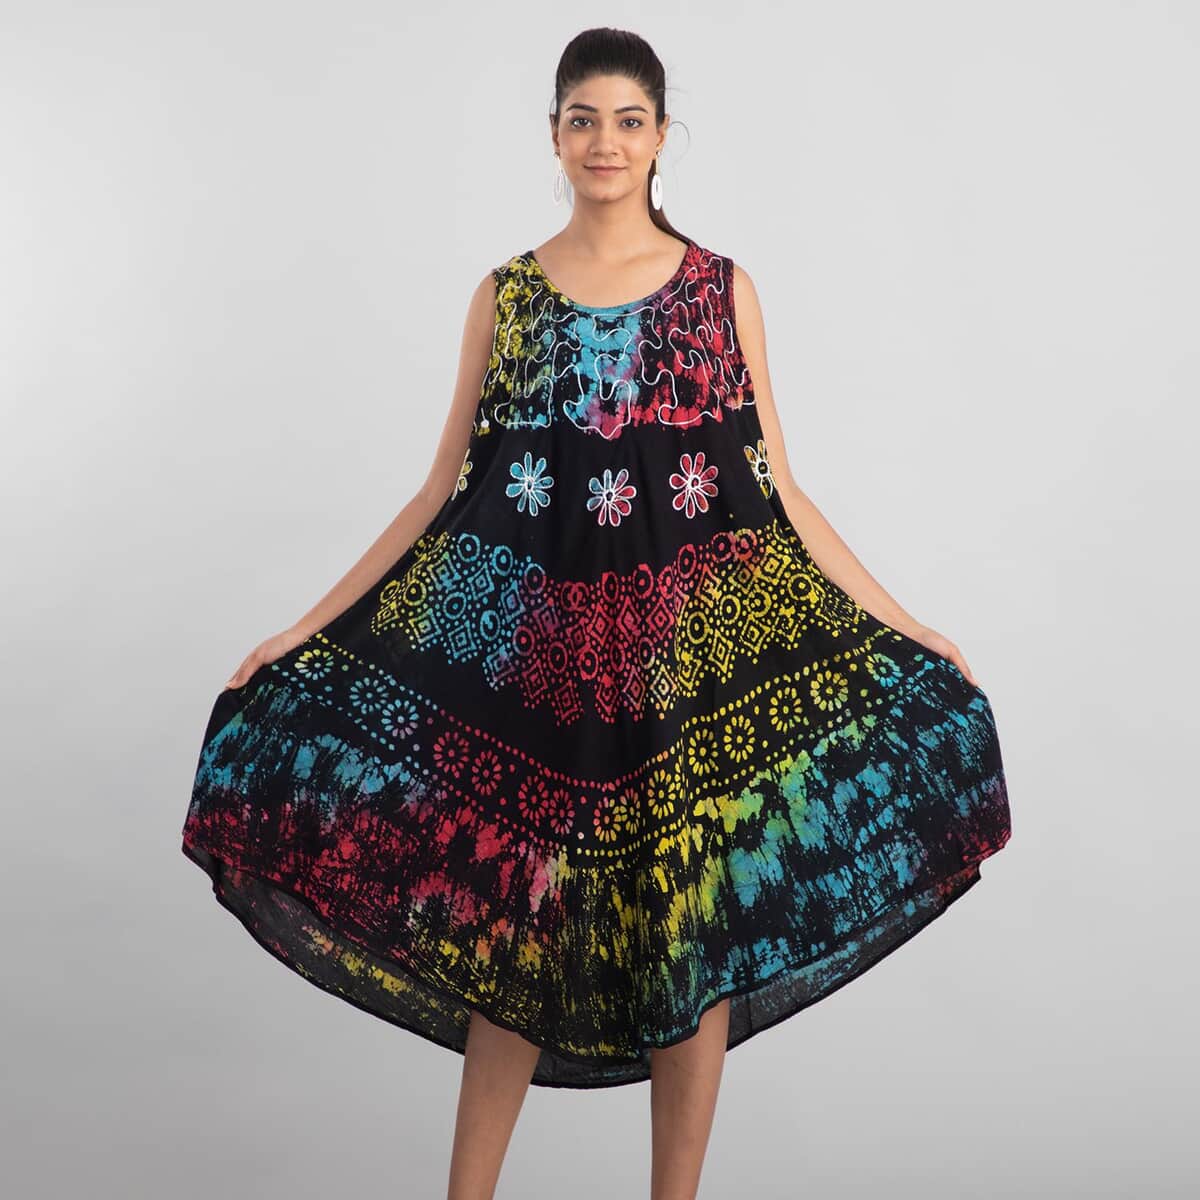 TAMSY Rainbow and Black Splatter Print Umbrella Dress - One Size Fits Most (48"L x 44"W) image number 1